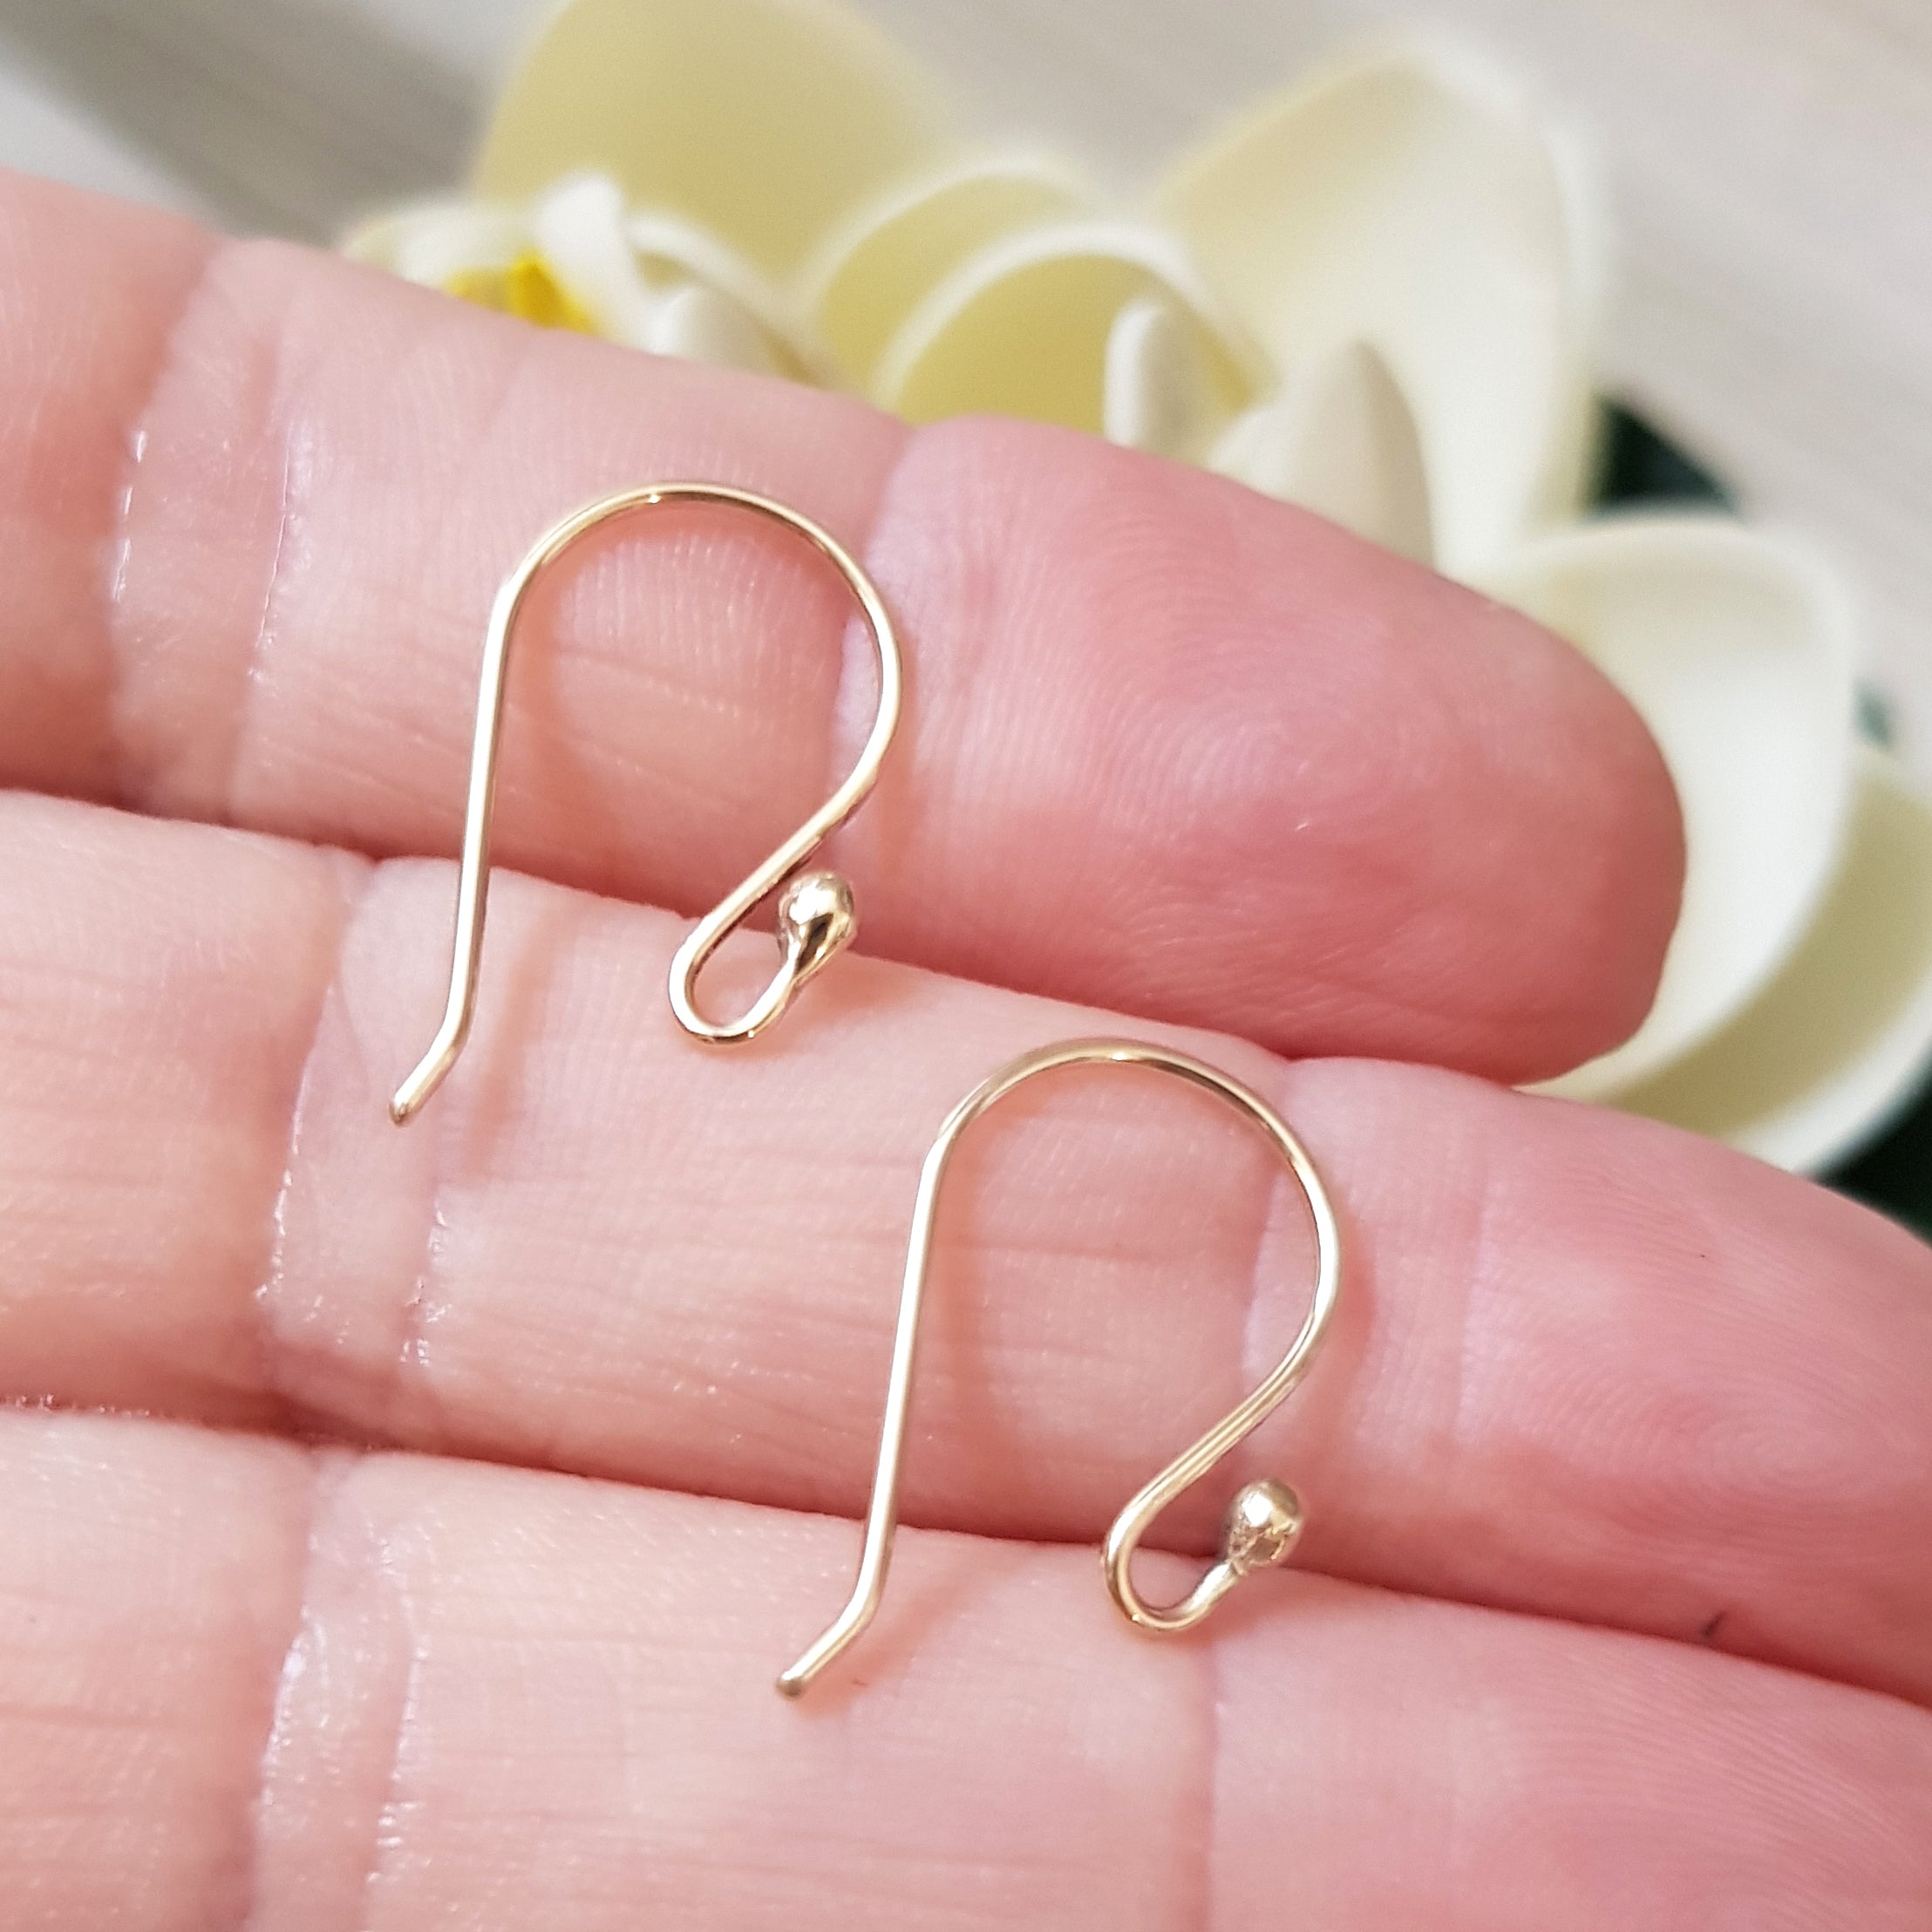 Earring - Hooks with Rhinestone - Golden - 1 Pair